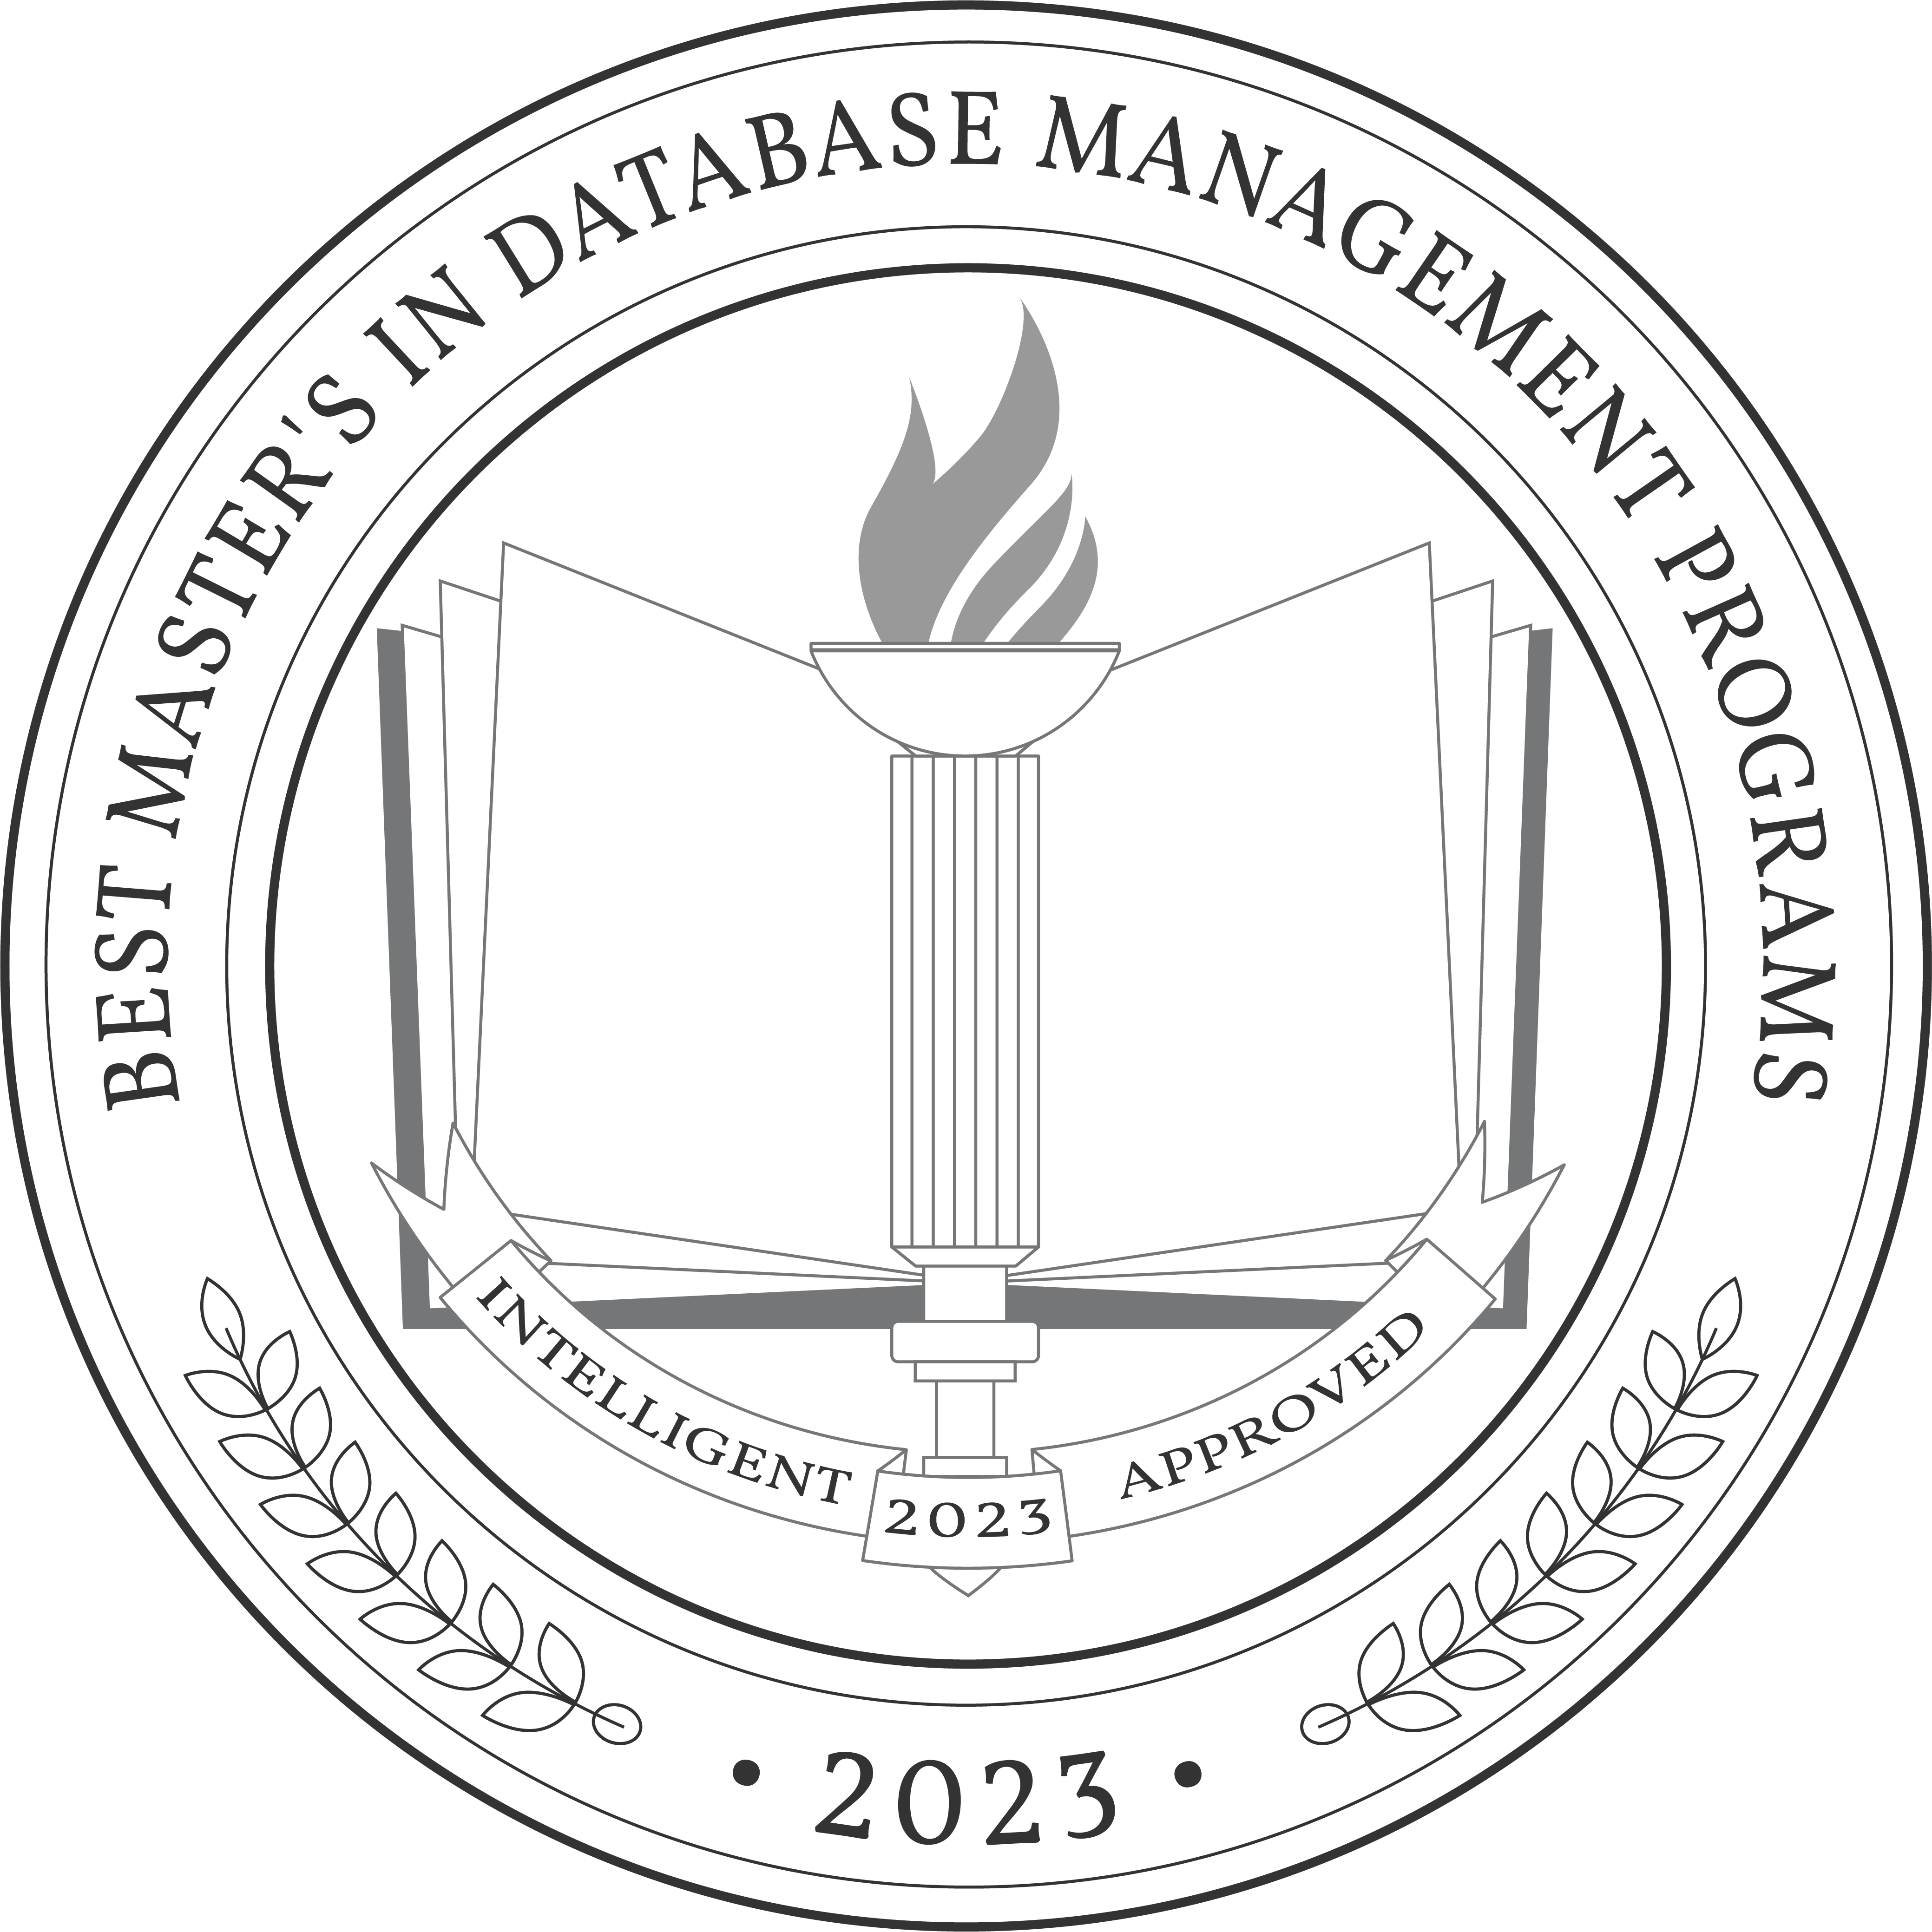 Best Master's in Database Management Programs badge